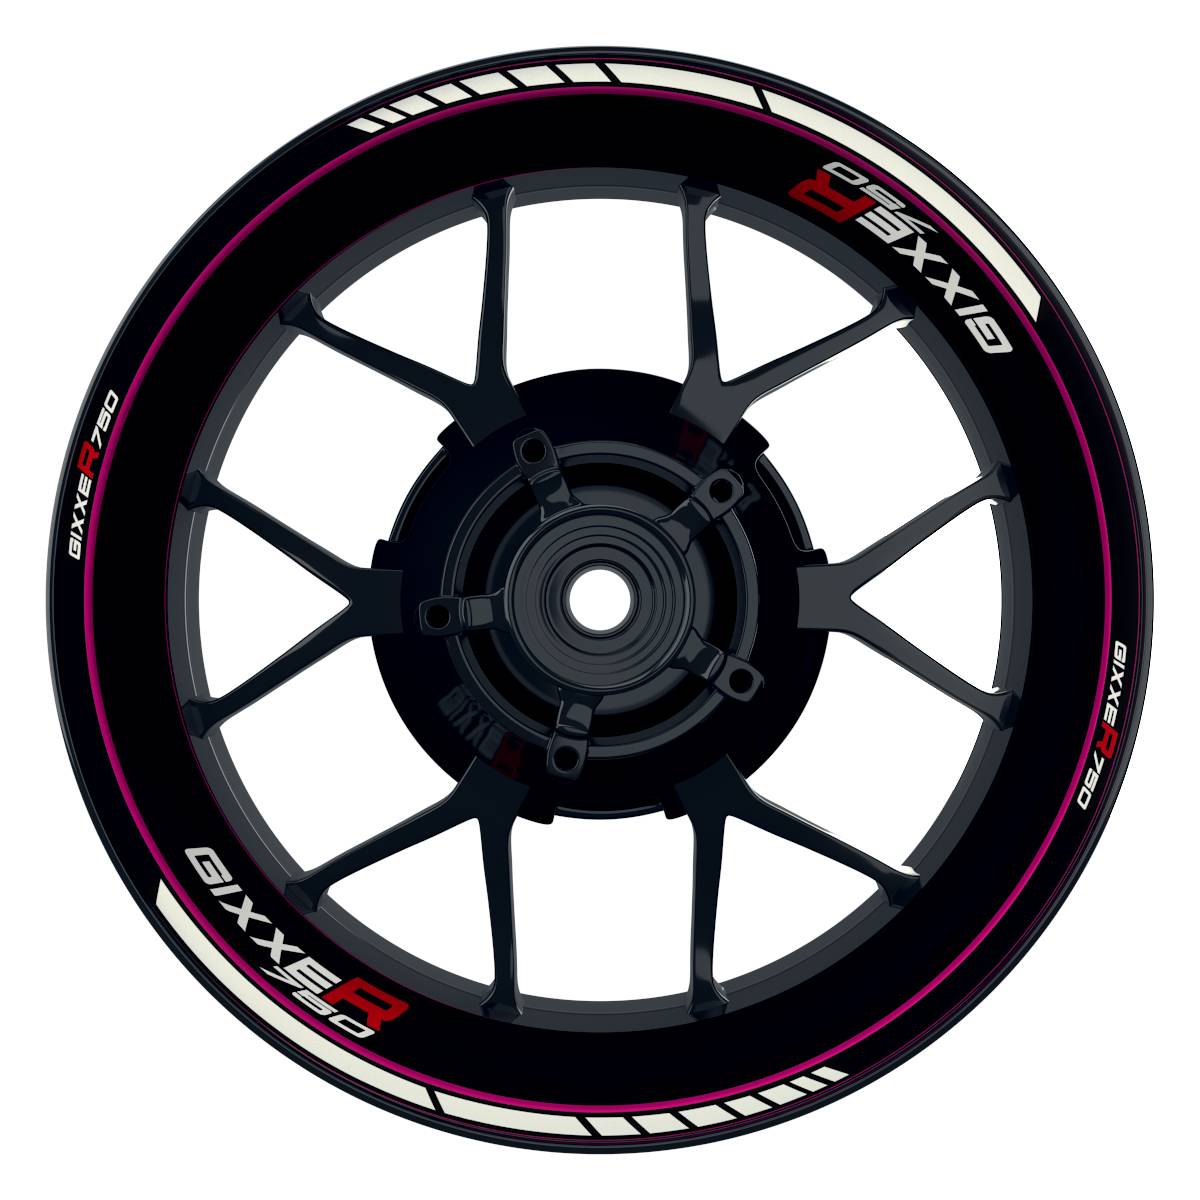 GIXXER750 Clean schwarz pink Wheelsticker Felgenaufkleber